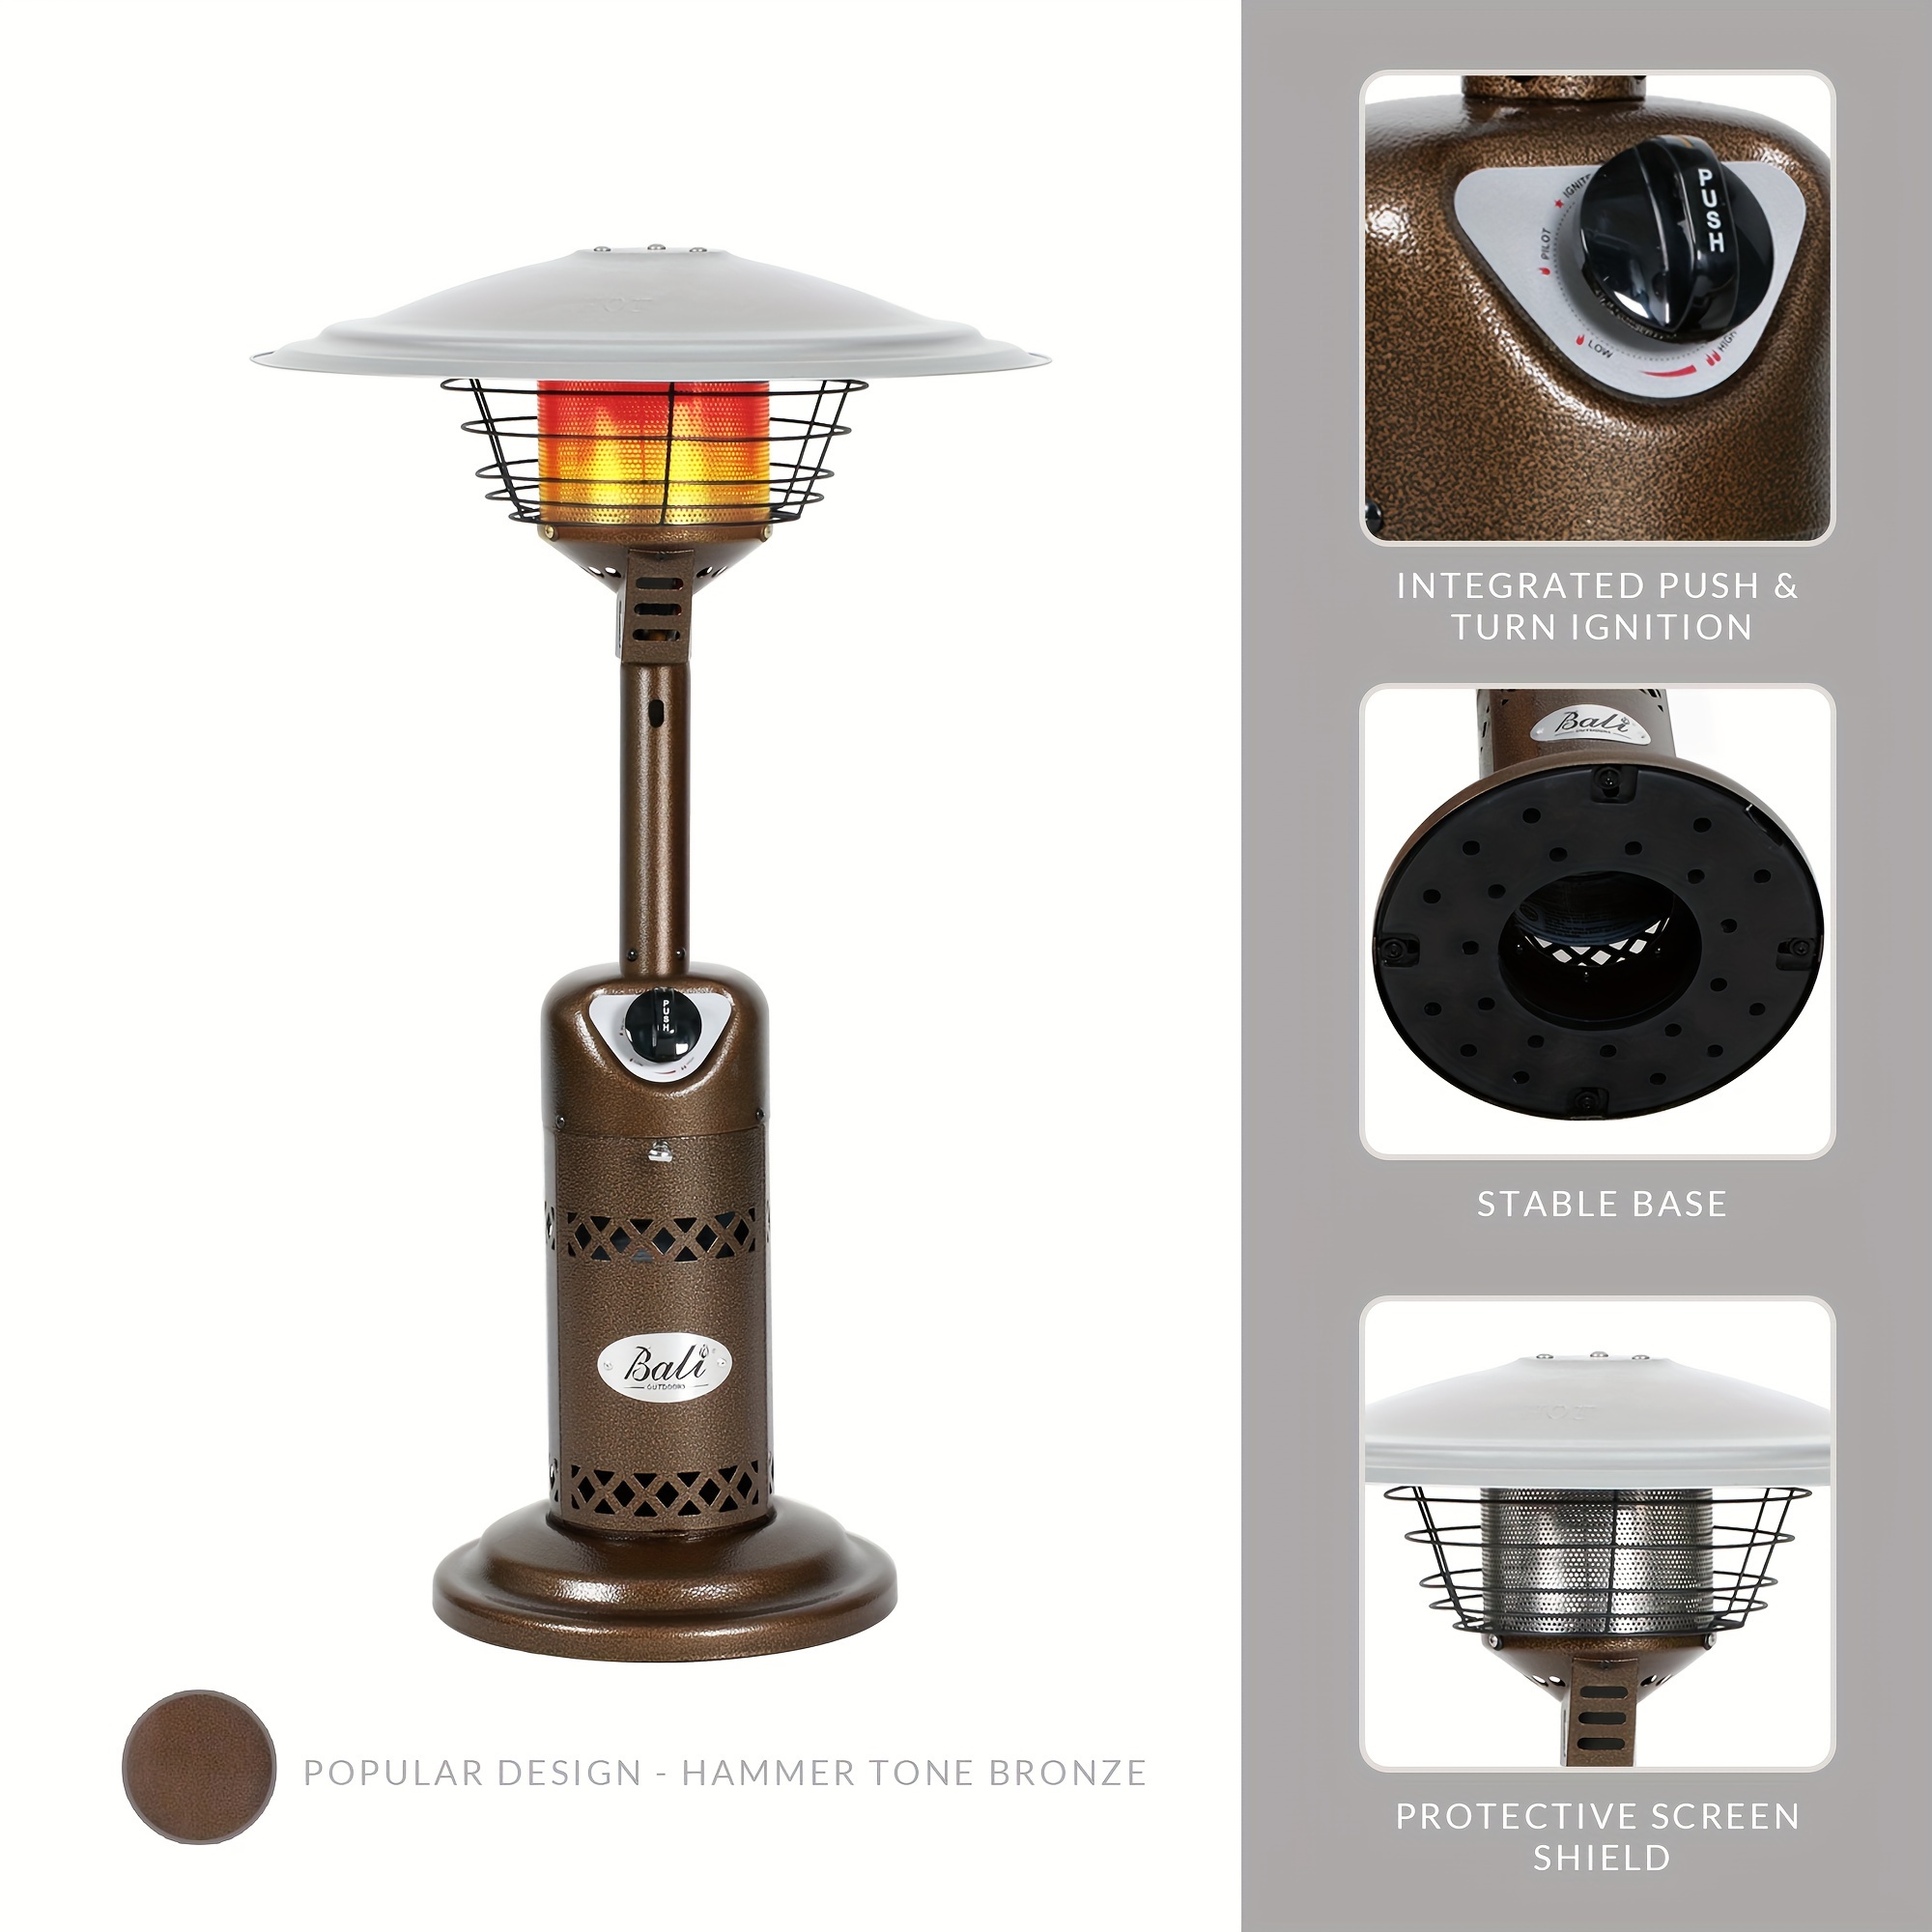 

Bali Outdoors Portable Patio Heater, Outdoor Propane Table Top Heater, Bronze